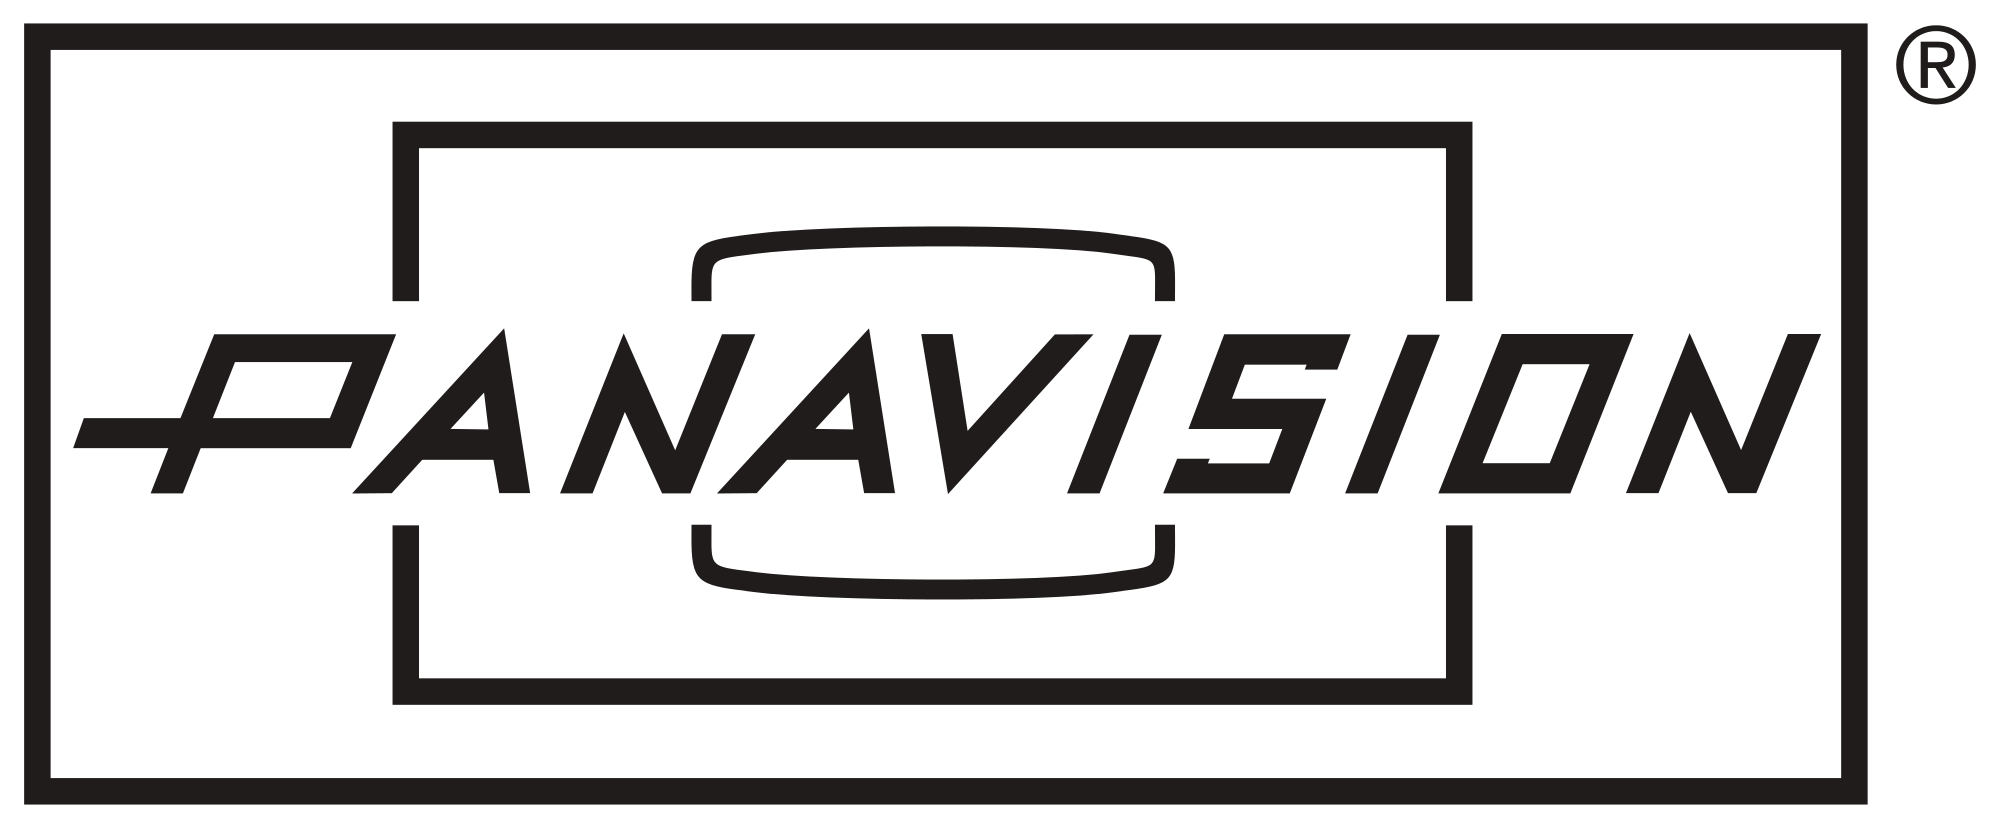 Panavision Logo - File:Panavision logo.svg - Wikimedia Commons